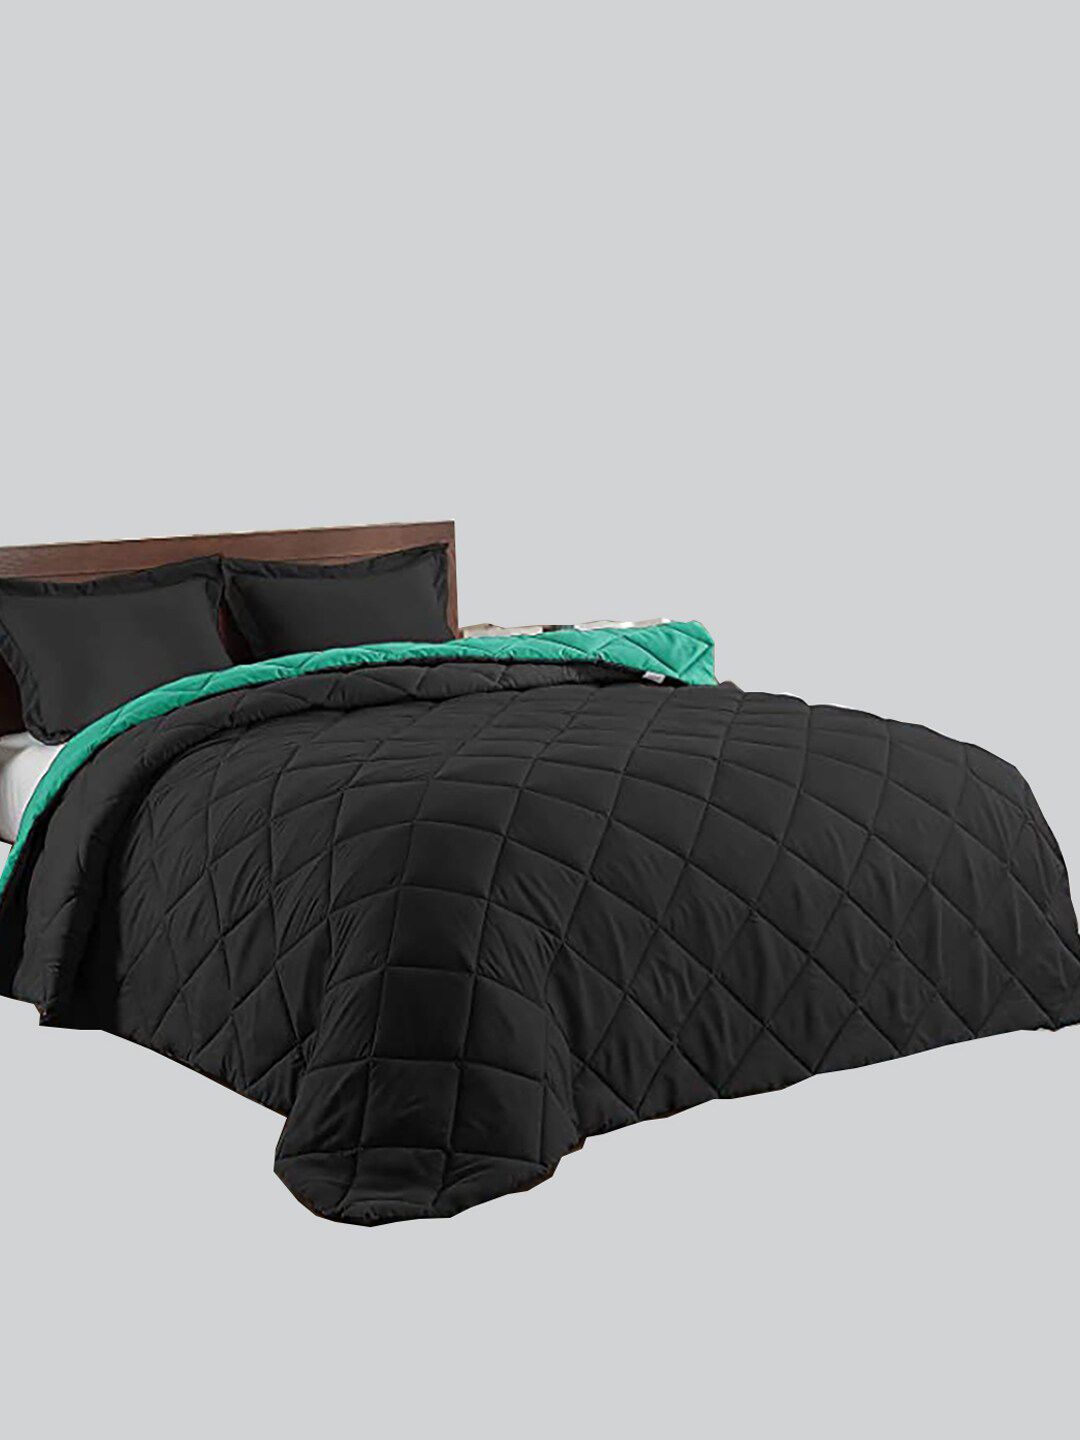 RAASO Black & Green Microfiber AC Room Single Bed Blanket Price in India